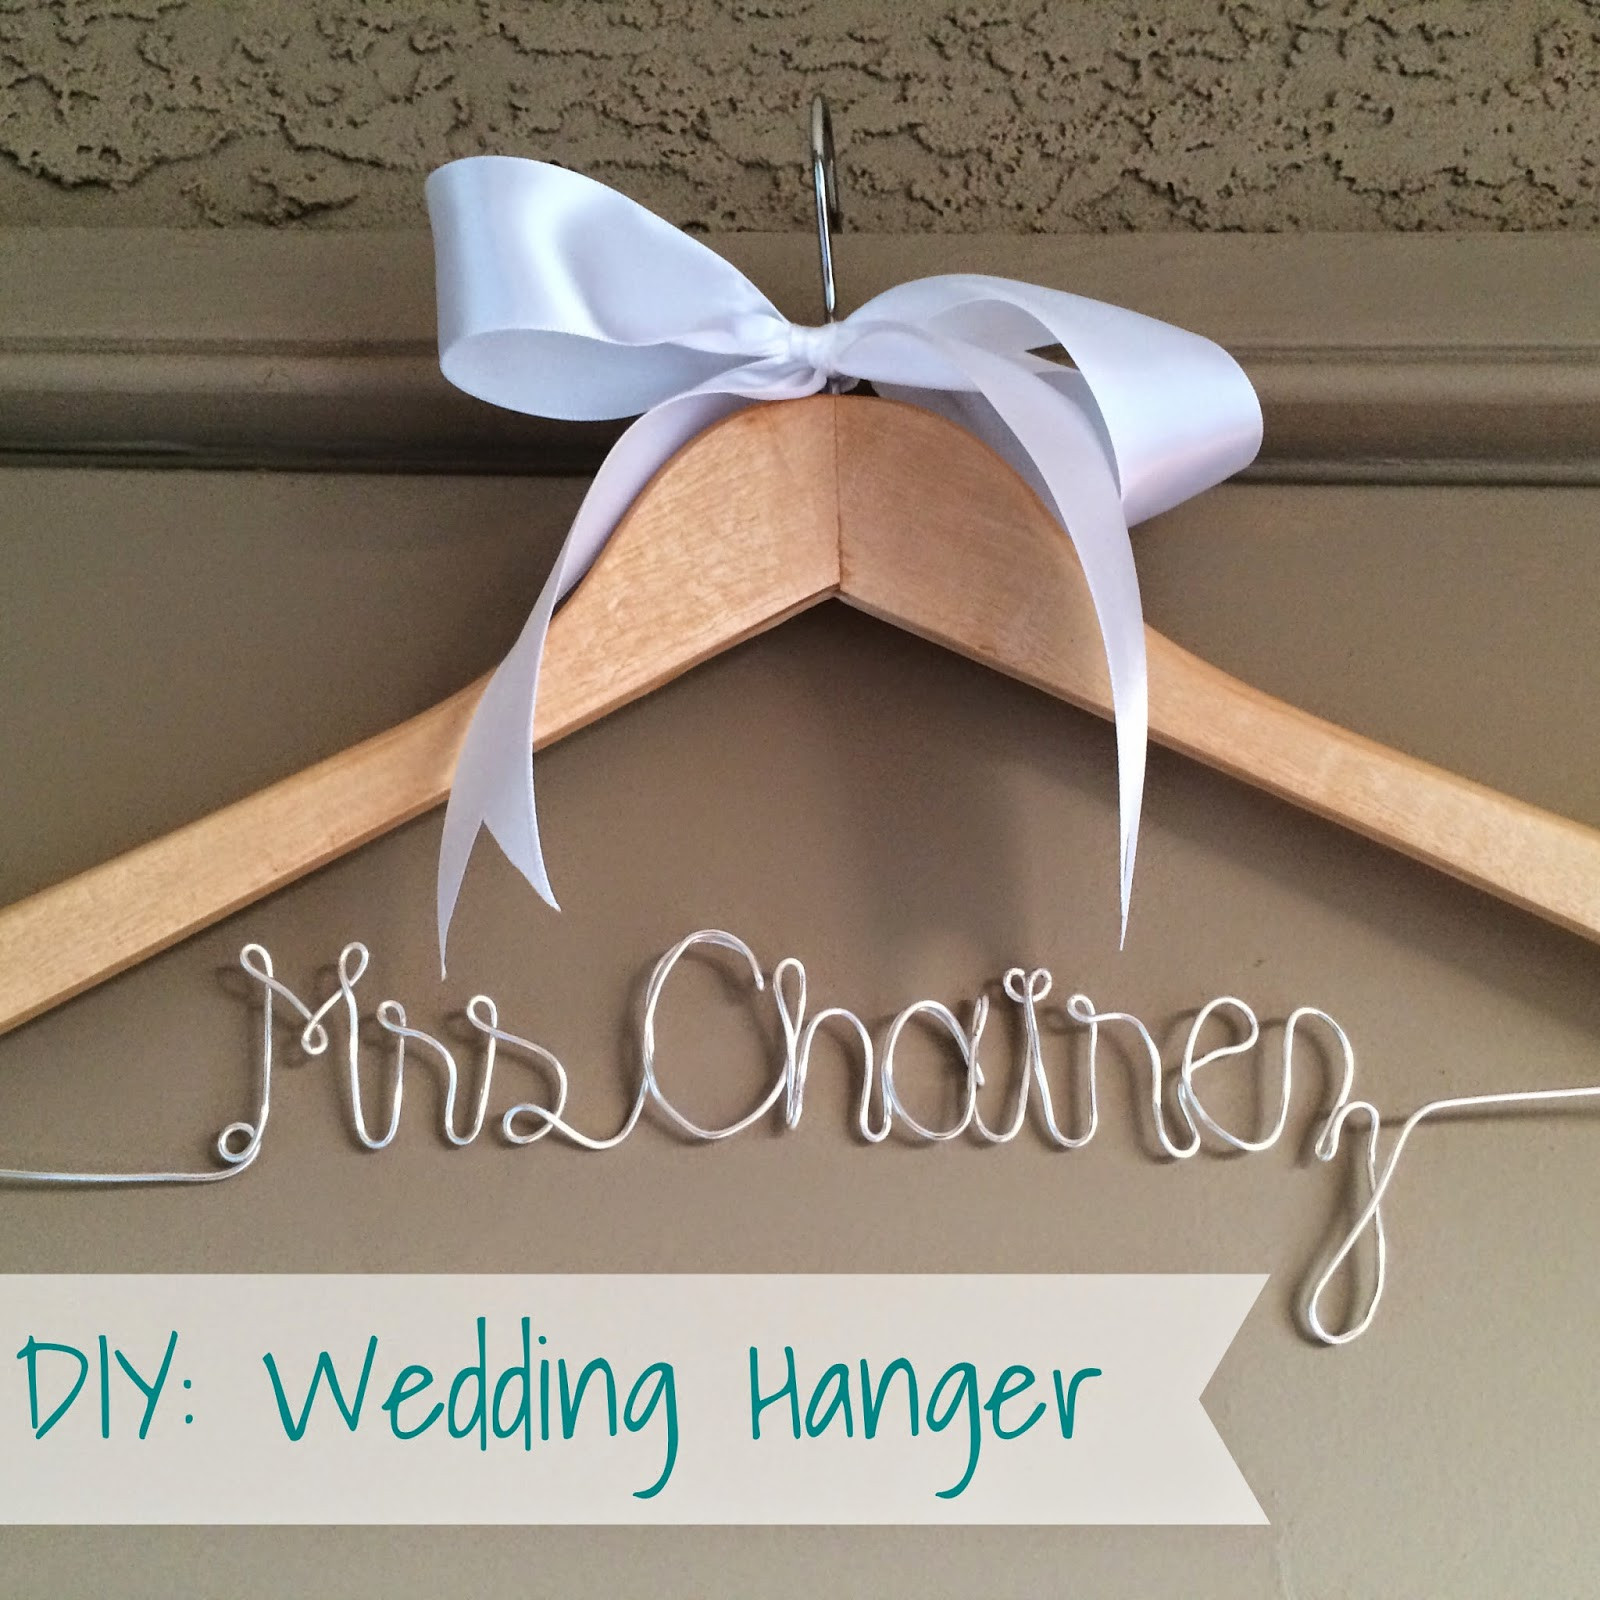 Best ideas about DIY Wedding Hanger
. Save or Pin Lisa loves John DIY Wedding Hanger Now.